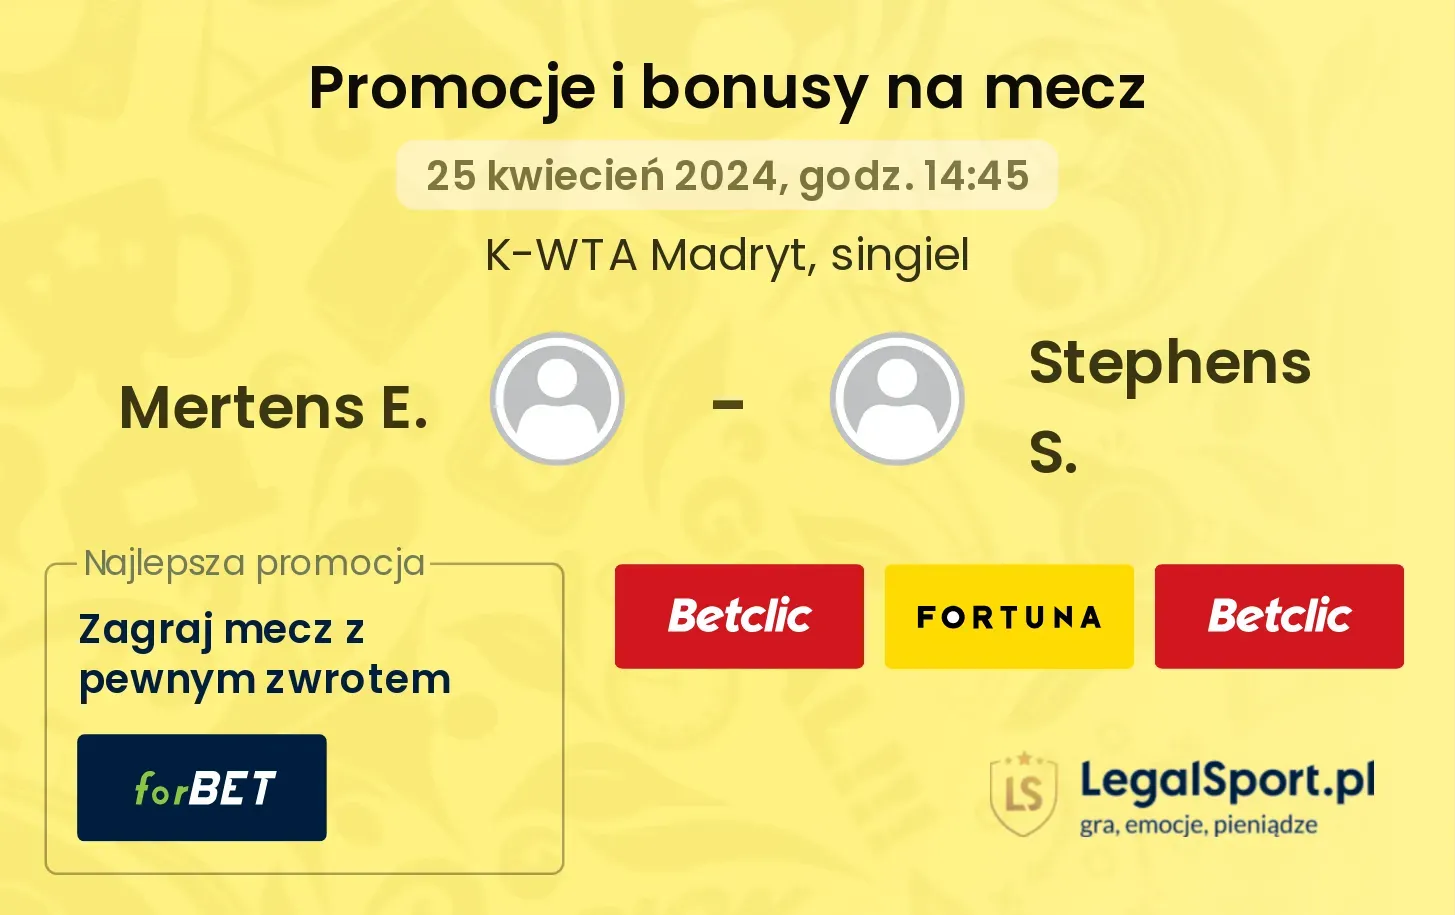 Mertens E. - Stephens S. promocje bonusy na mecz